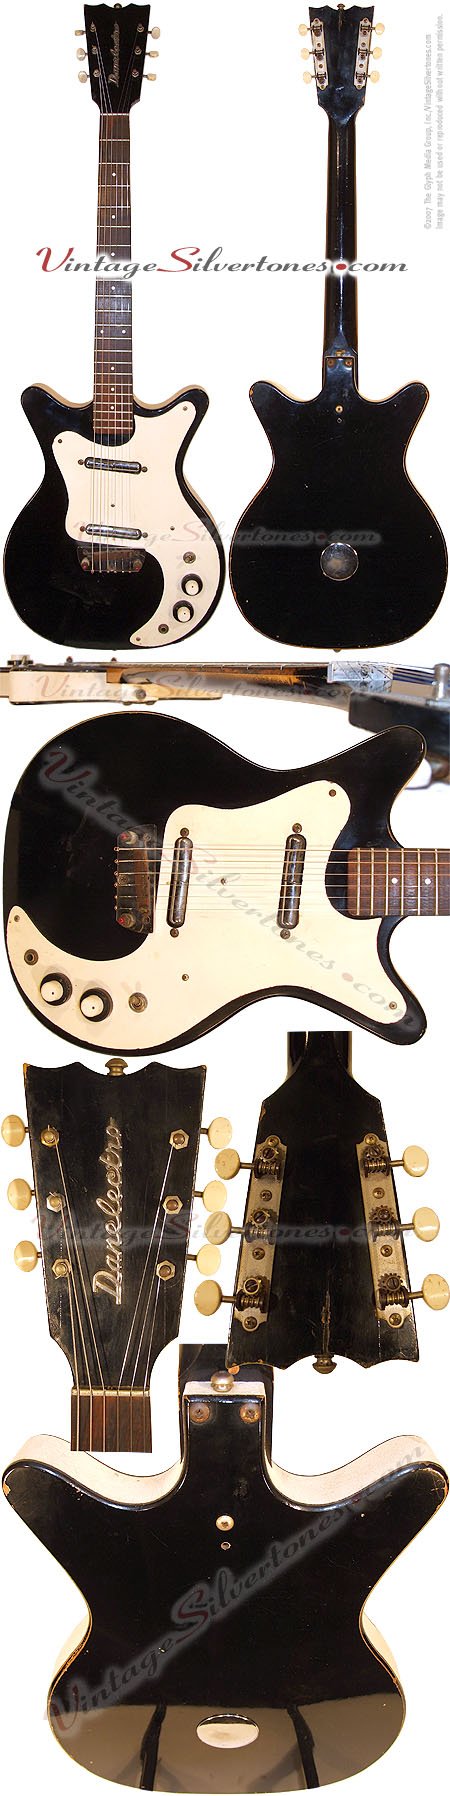 Danelectro Hand Vibrato 4021, semi-hollow body, electric guitar with 2 pickups in black circa 1964